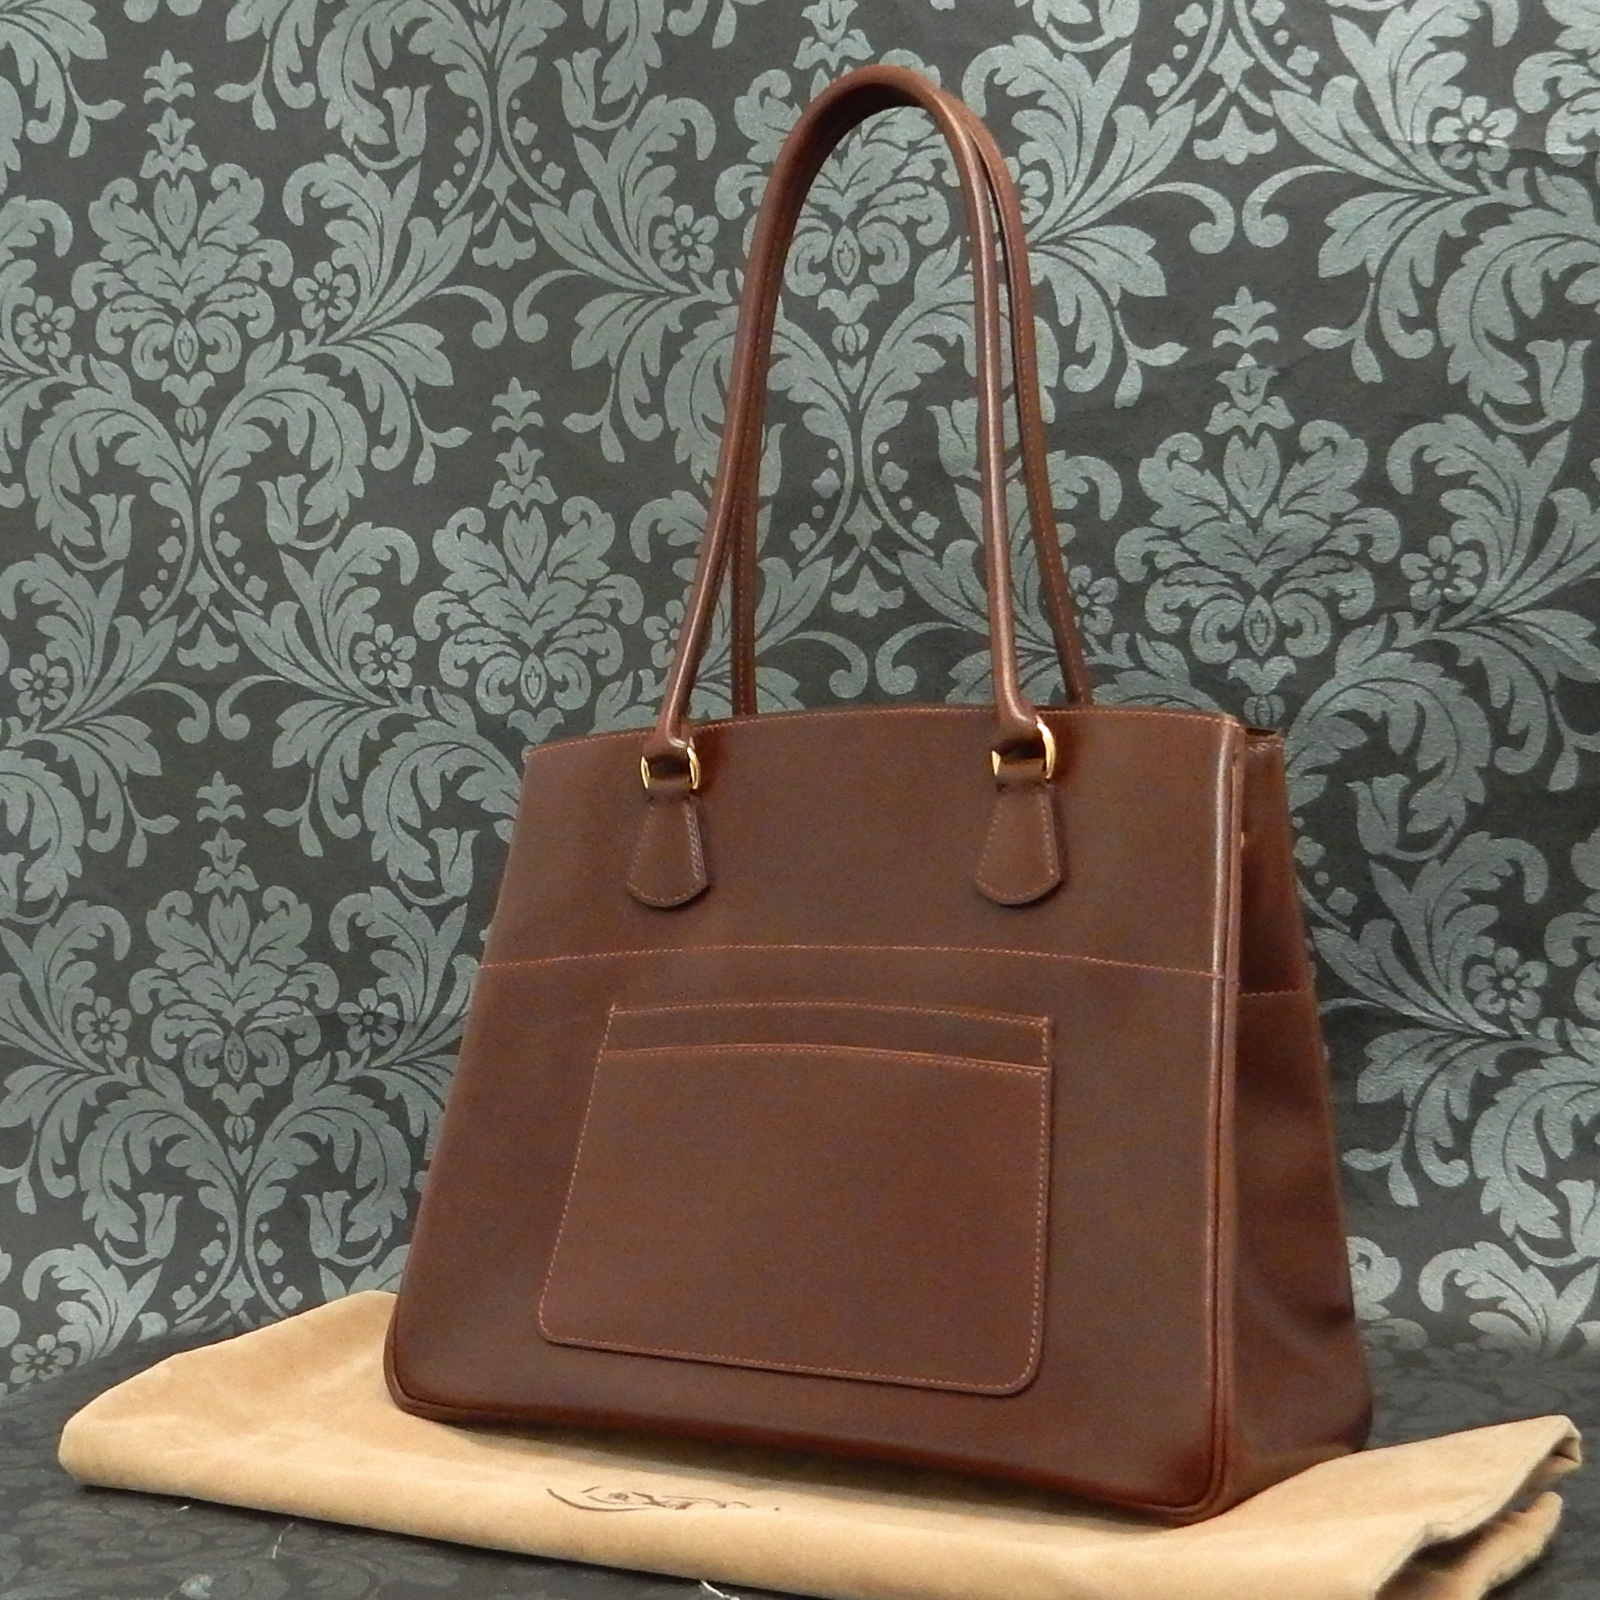 hermes leather tote bag